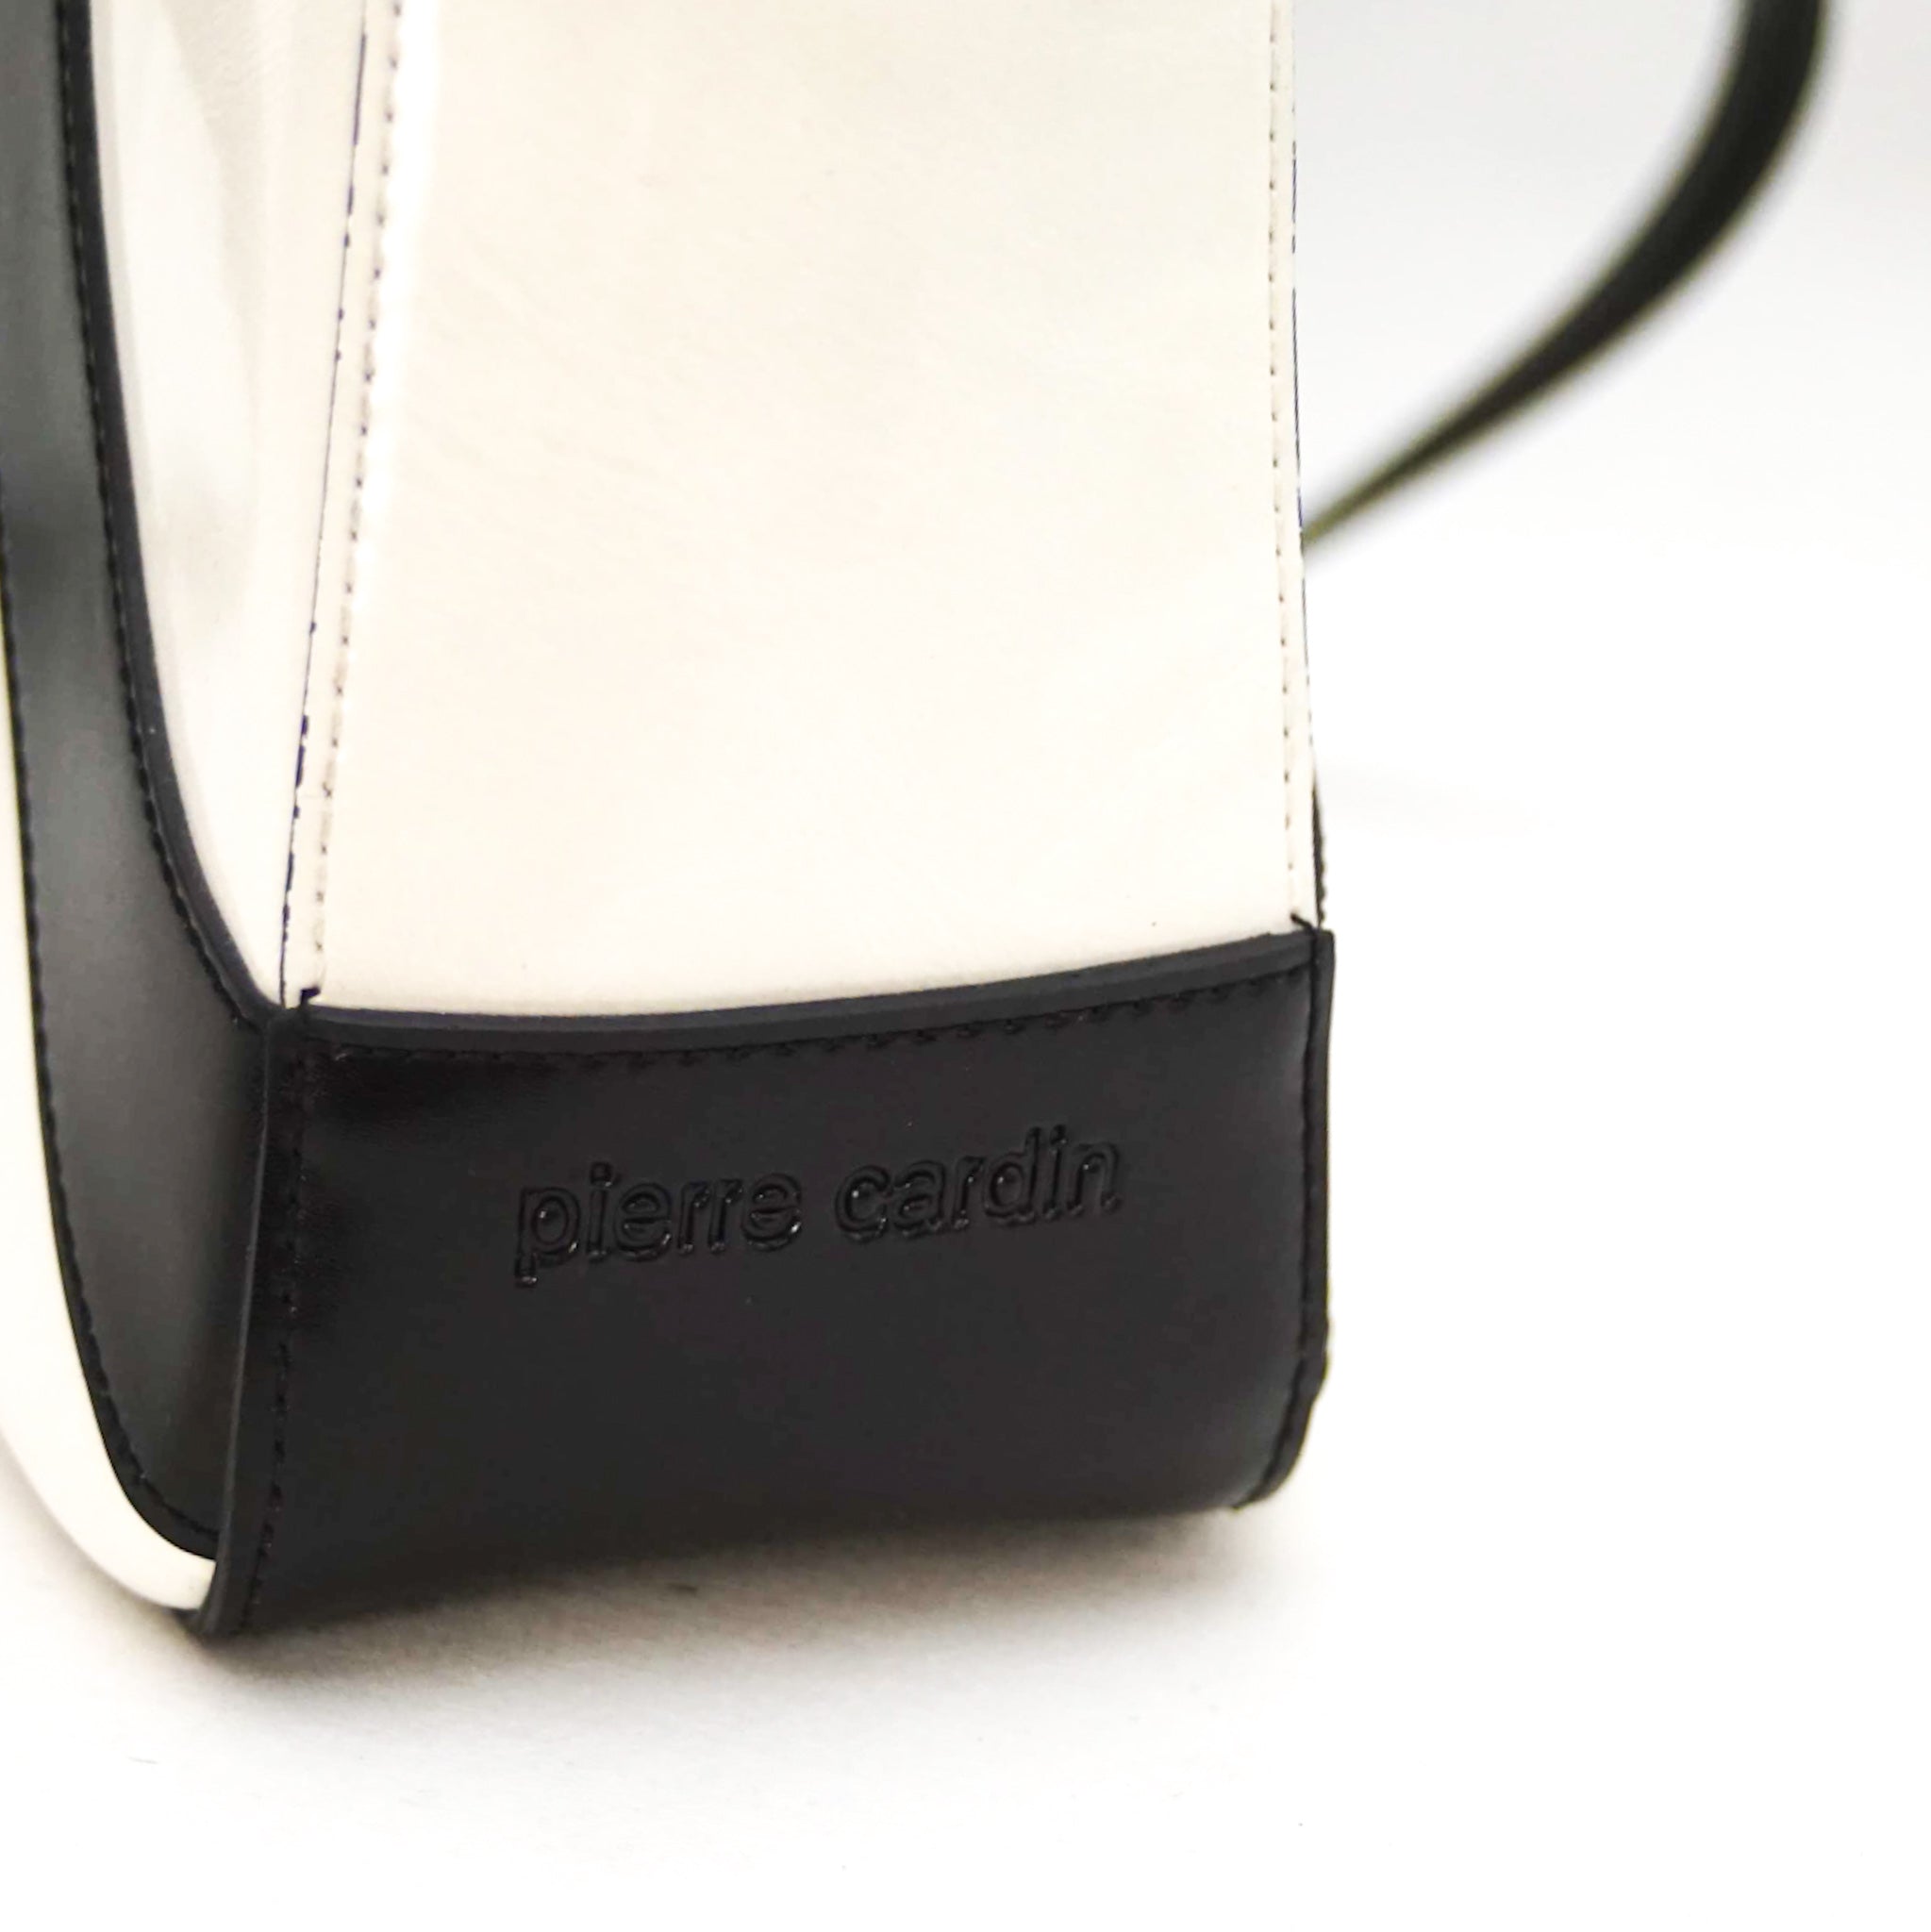 Pierre Cardin Leather Purse/Phone Holder- Red | eBay